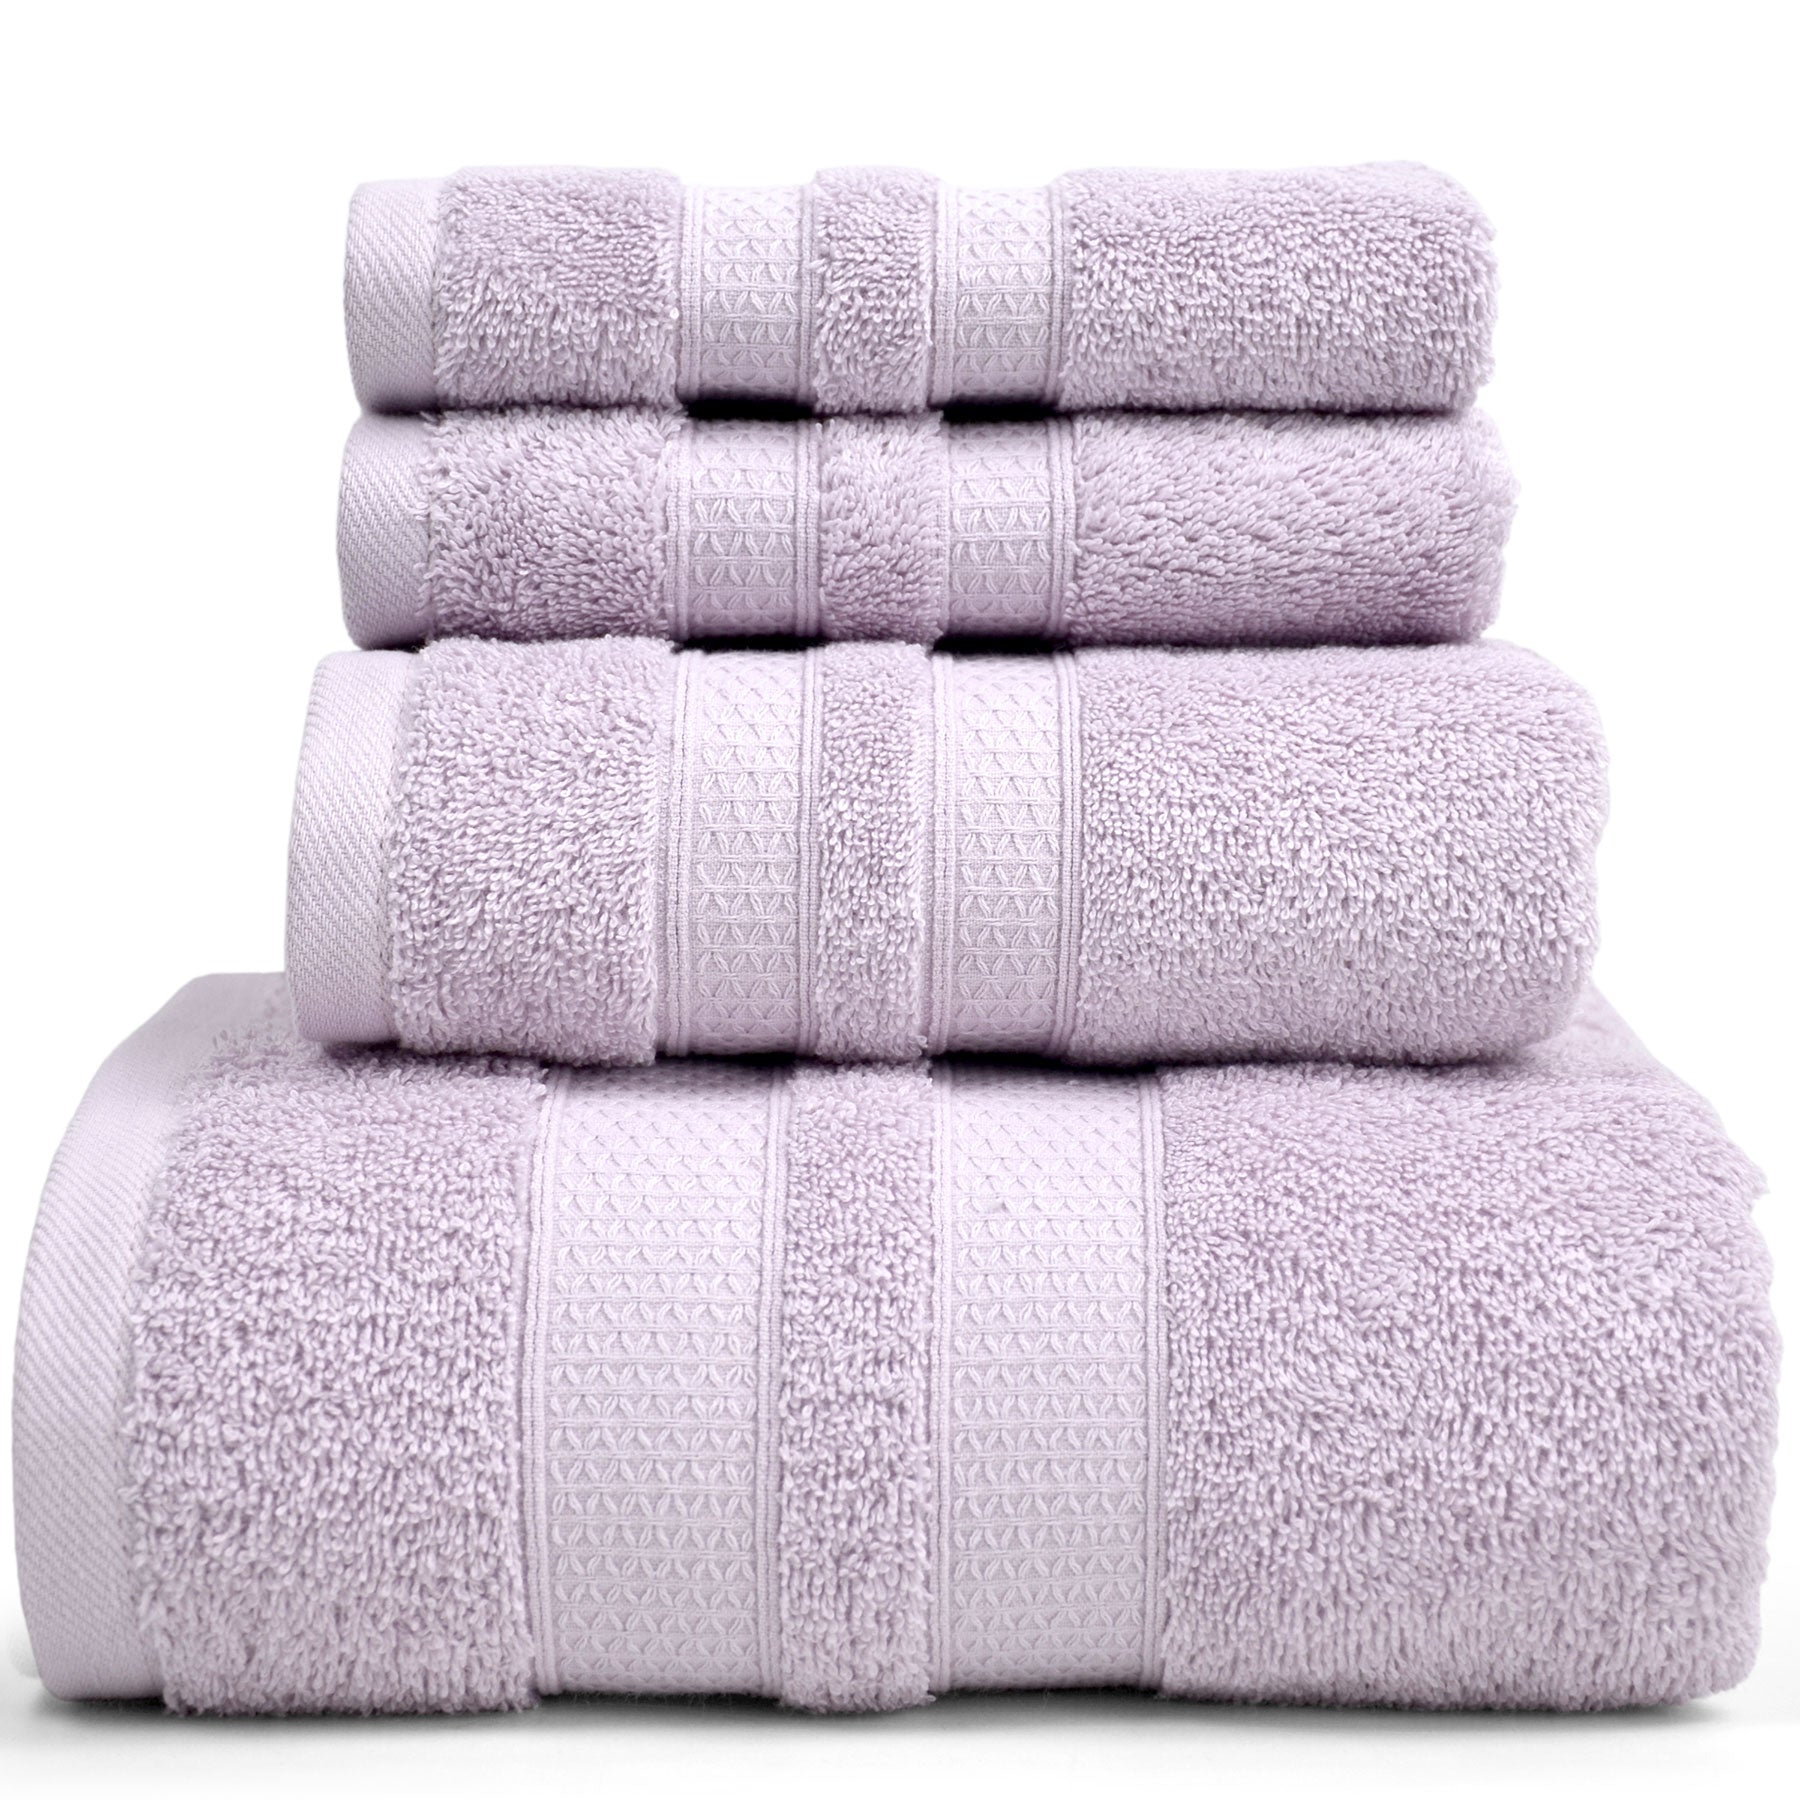 High Quality Bathroom Towel Set, 1 Hand Towel & 1 Bath Towel